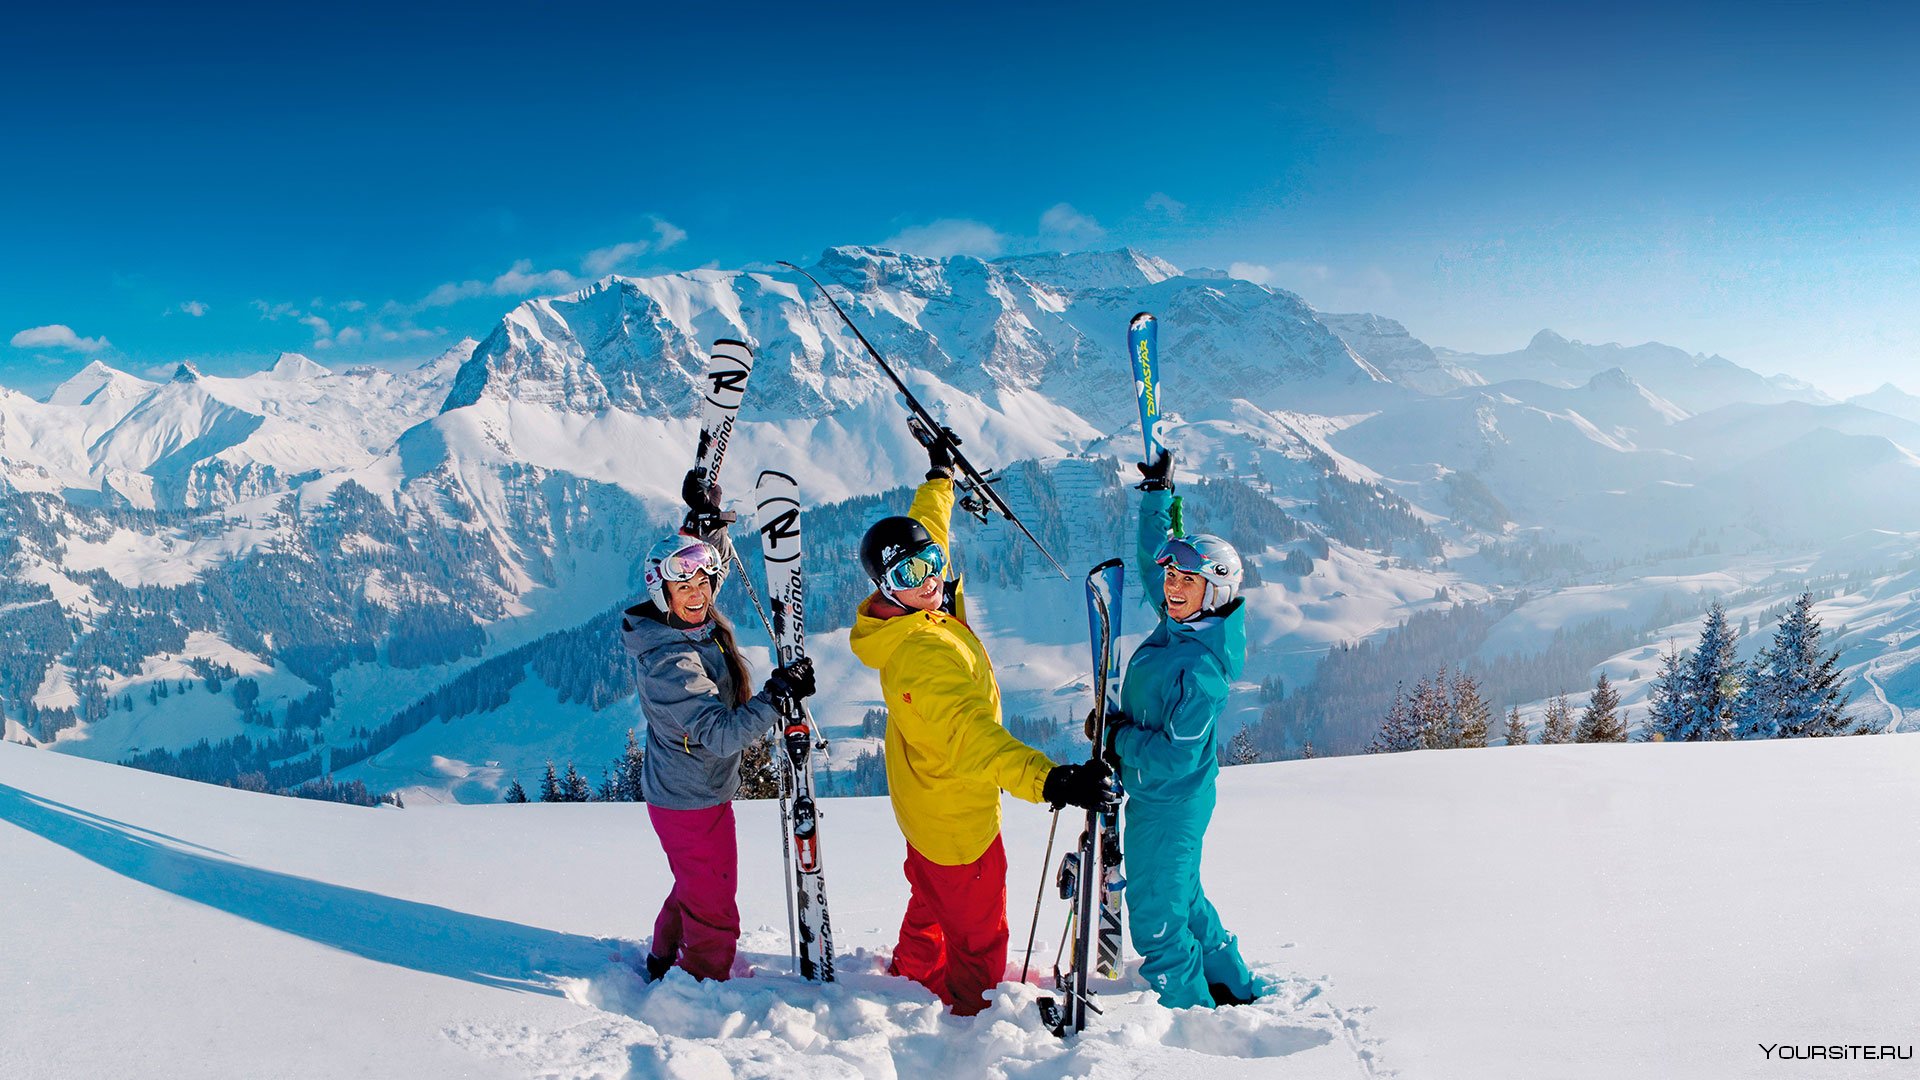 Alps ski skiing. Свизерленд Швейцария туризм. Горнолыжка в Швейцарии. Адельбоден горнолыжный курорт. Альпы Швейцария курорты.